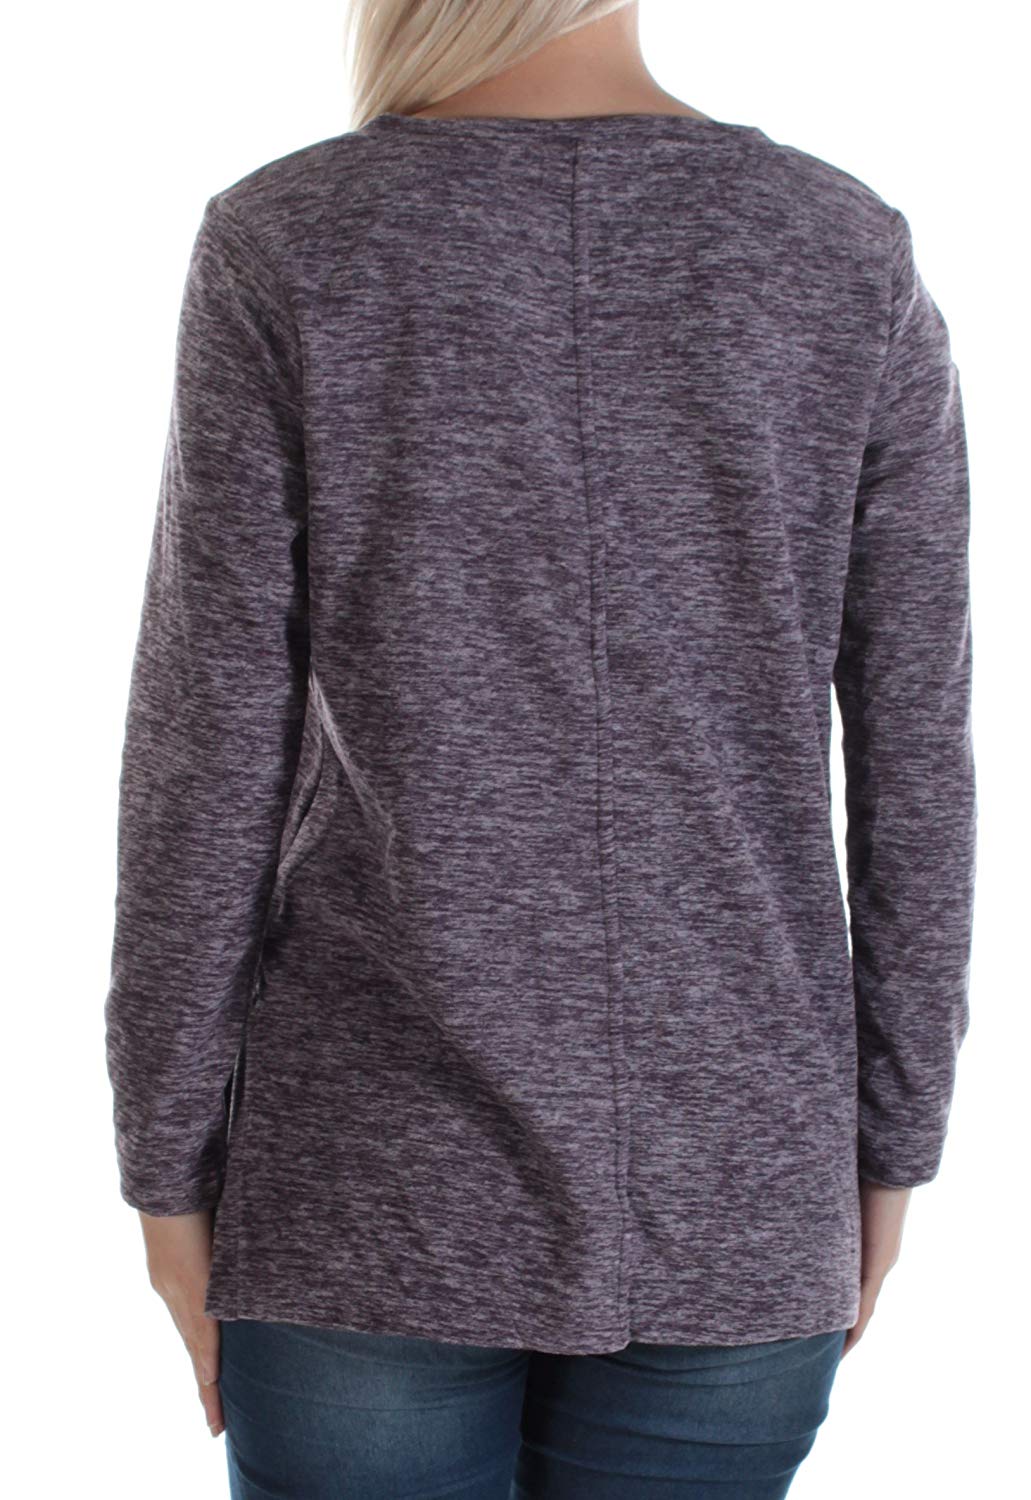 Style & Co. Petite Space-Dye Sweater Dark Grape PS